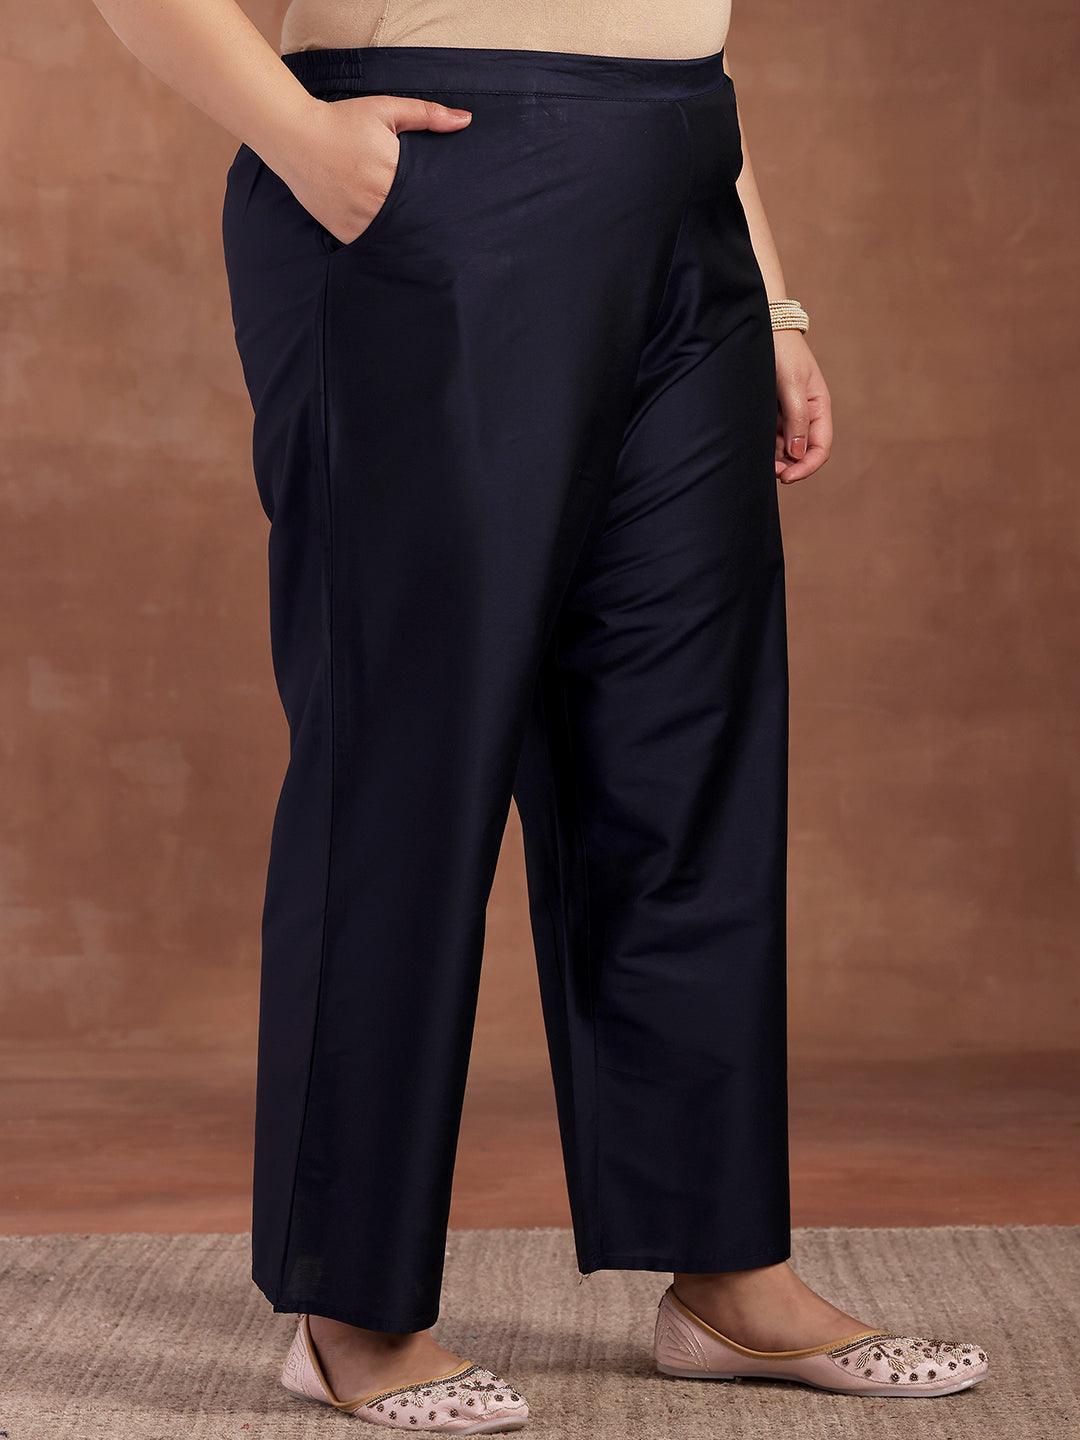 Plus Size Navy Blue Yoke Design Silk Blend Straight Suit With Dupatta - Libas